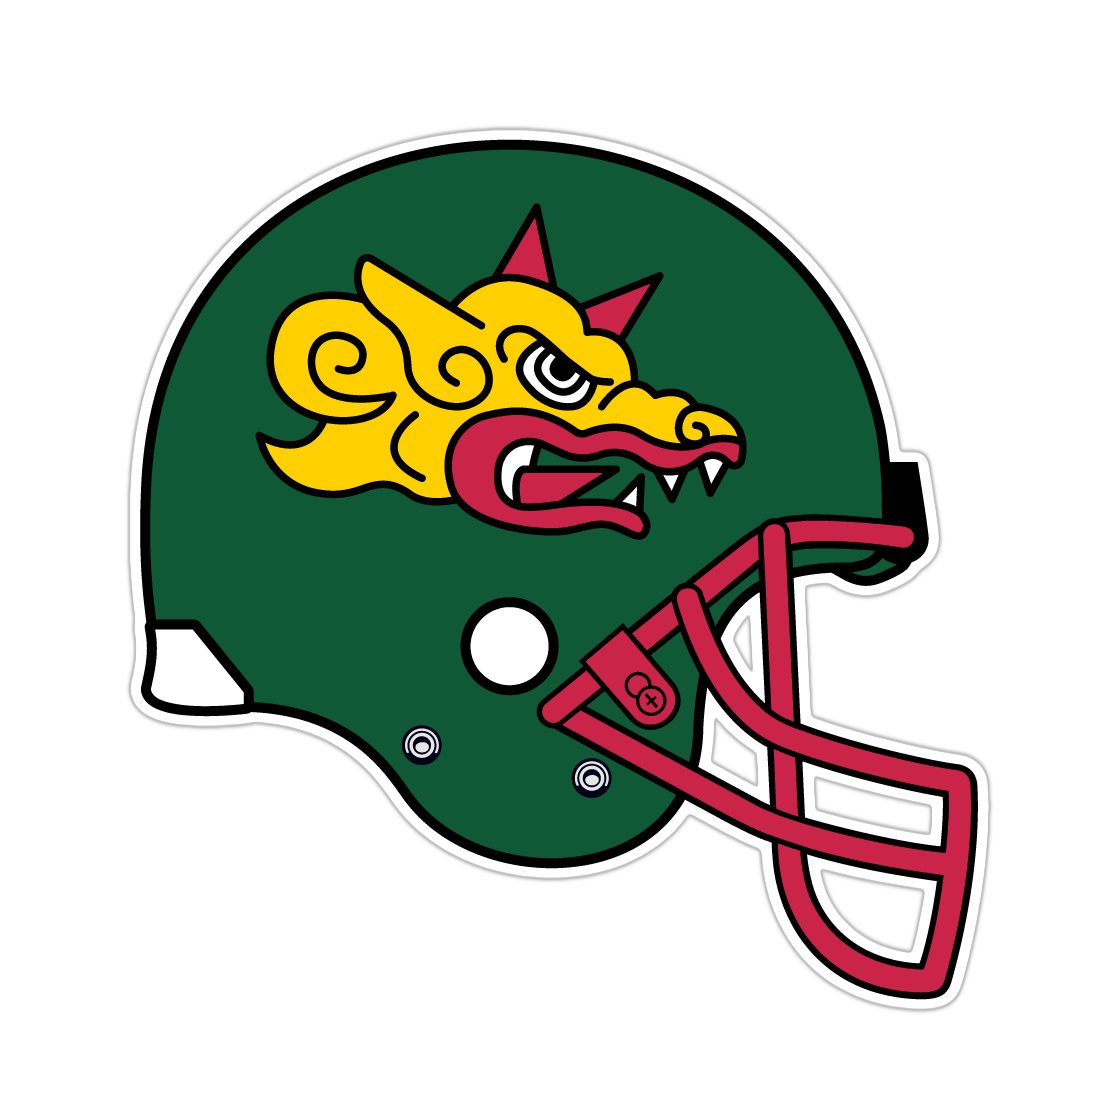 Barcelona Dragons helmet